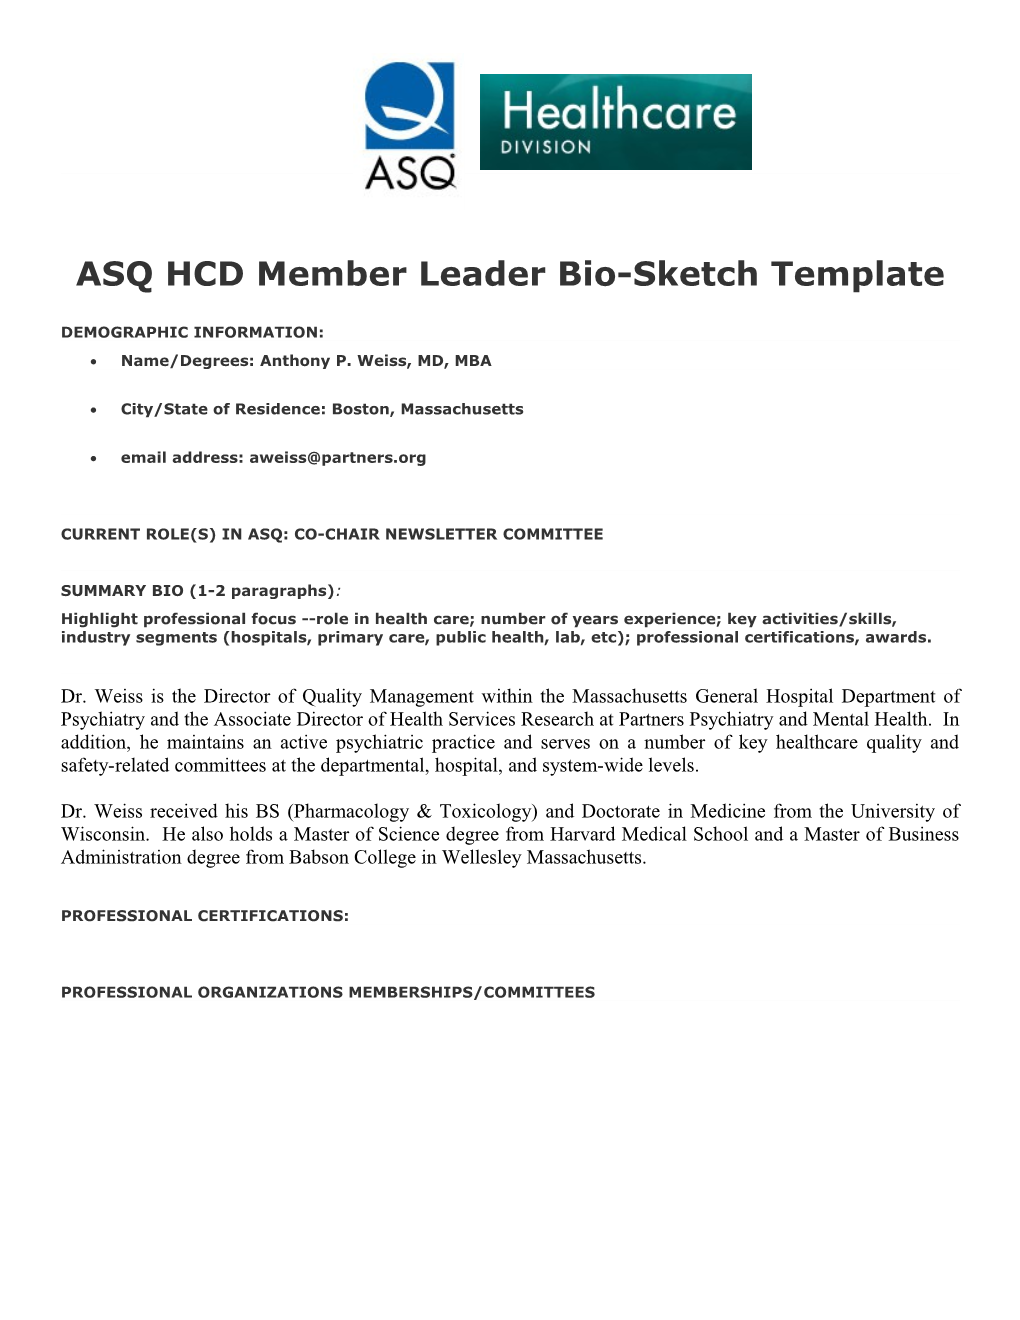 ASQ HCD Member Leader Bio-Sketch Template